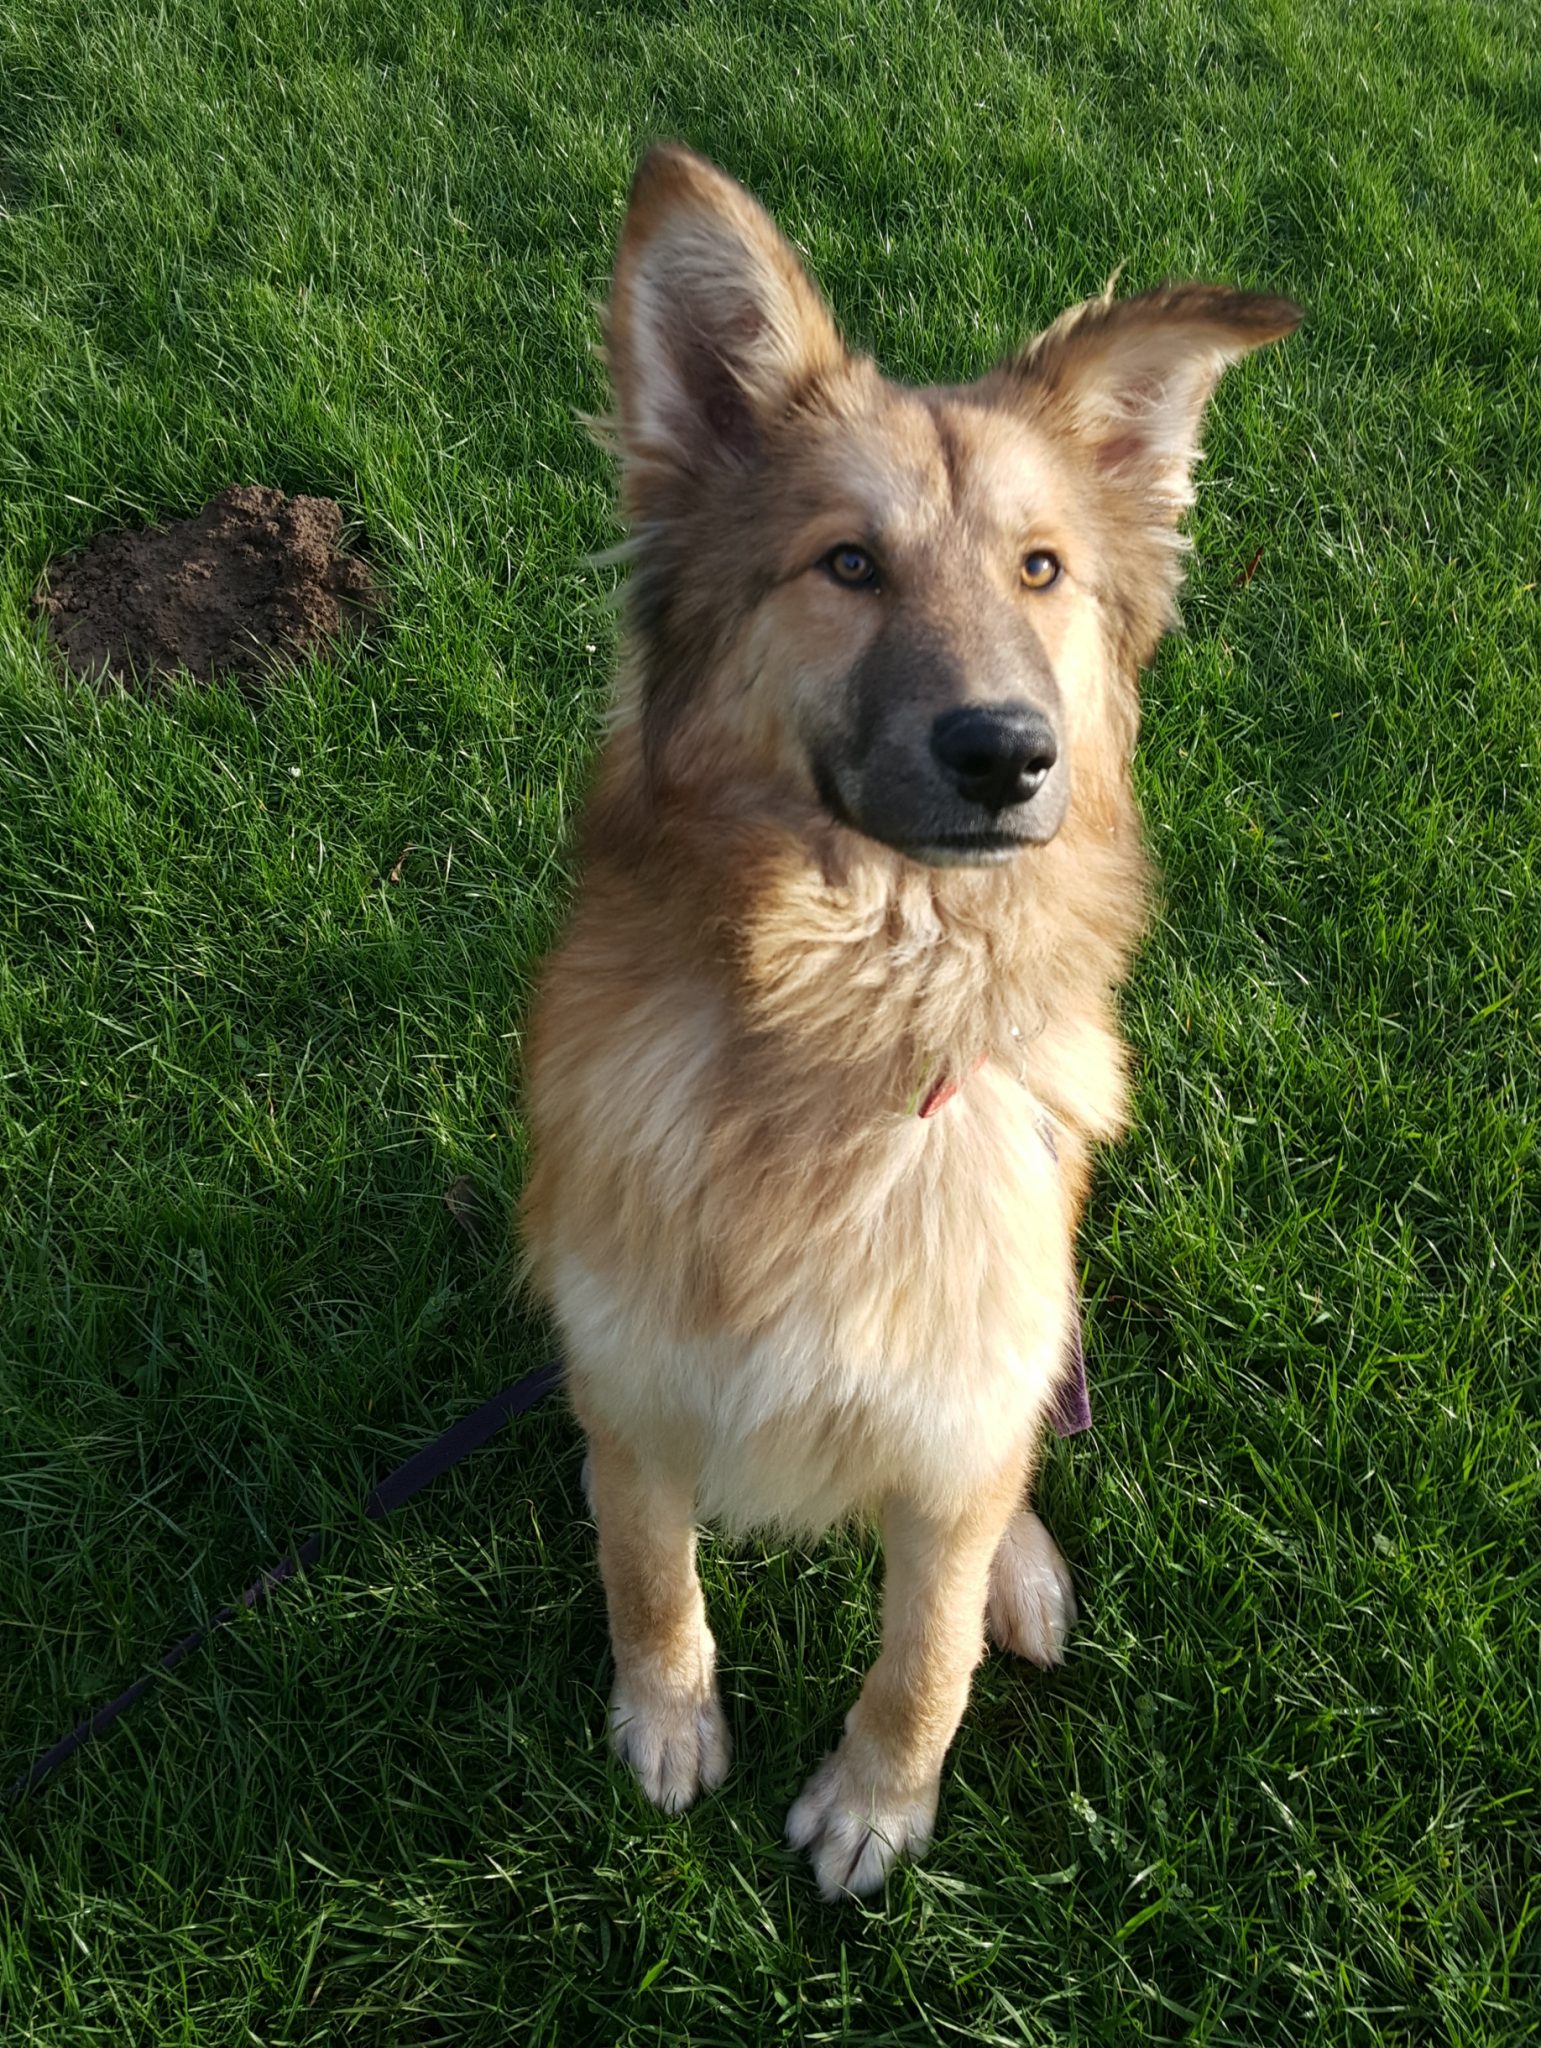 Merlin - Dog training help & support